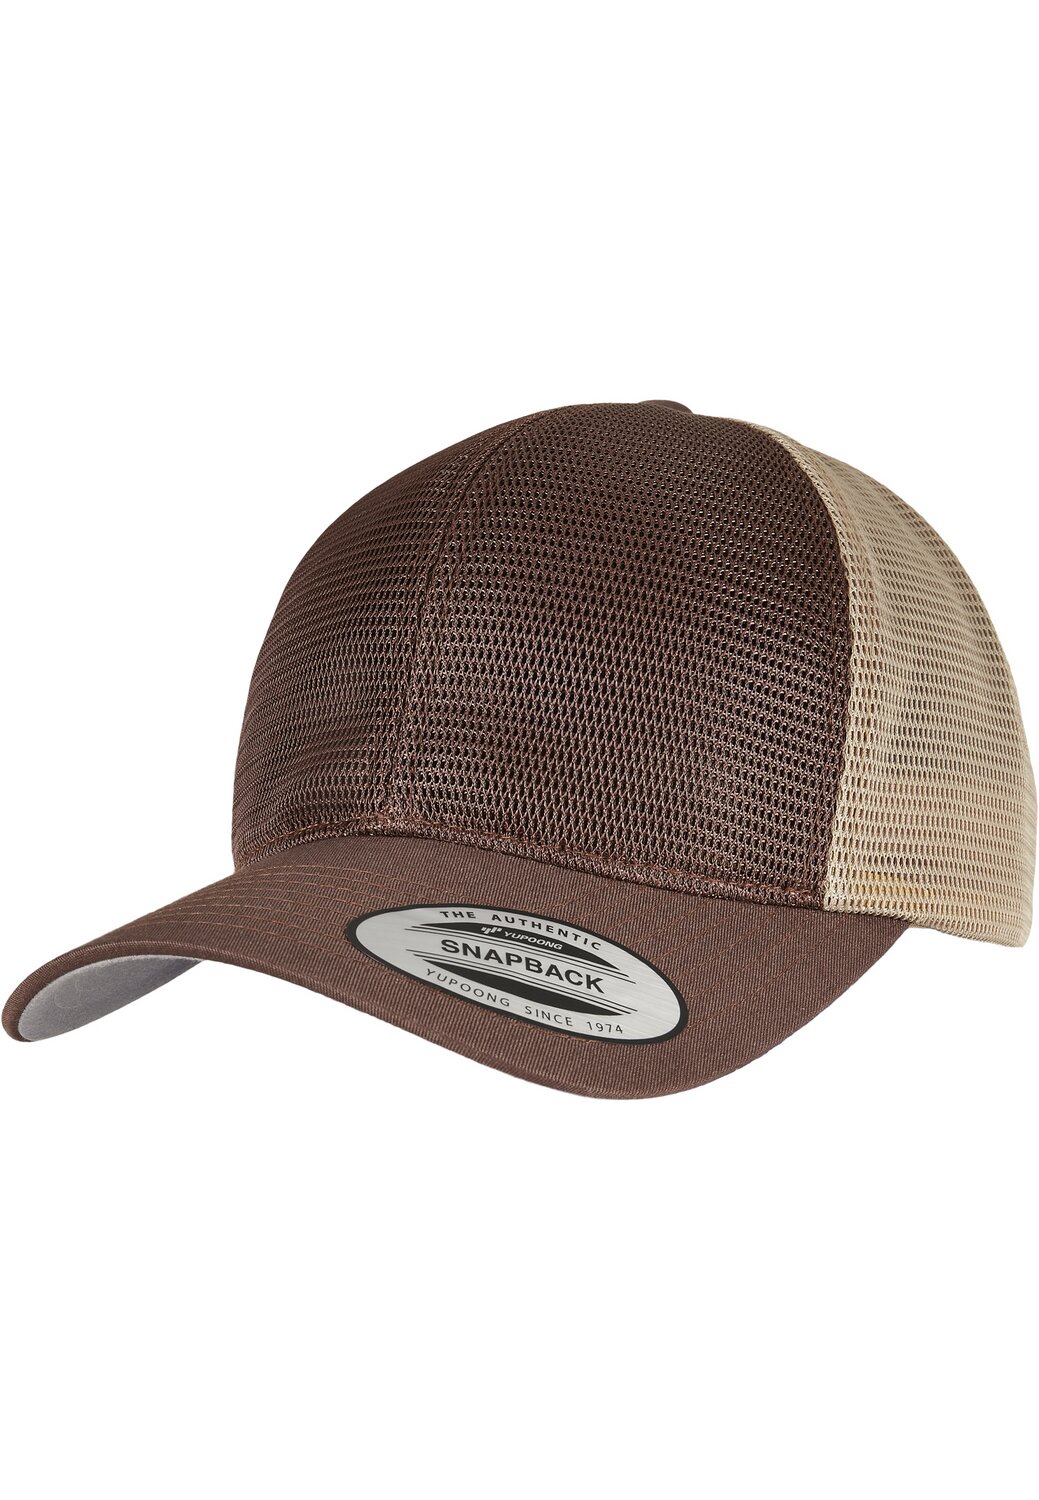 Baseball Cap 360° Omnimesh Flexfit 2-Tone brown/khaki | MAXISCOOT